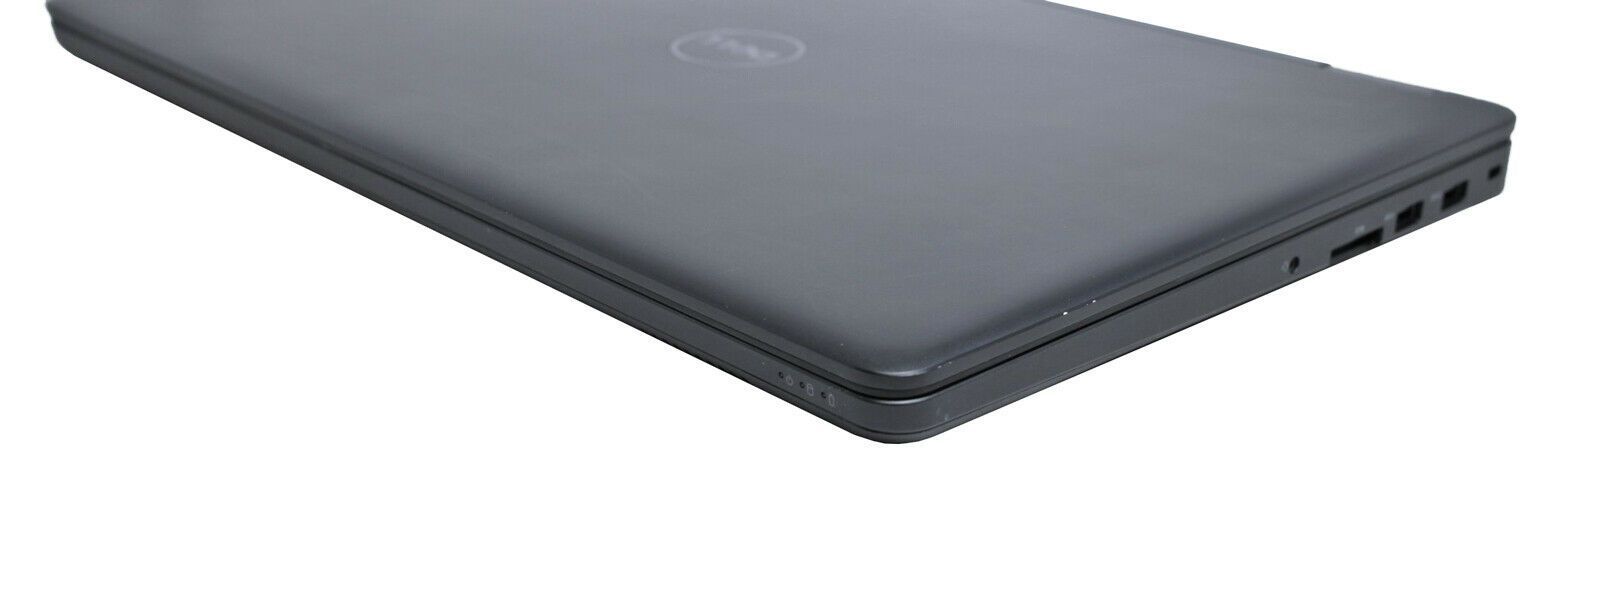 Dell Latitude E5570 IPS FHD Laptop: i7-6820HQ, 256GB SSD, 8GB RAM VAT - CruiseTech